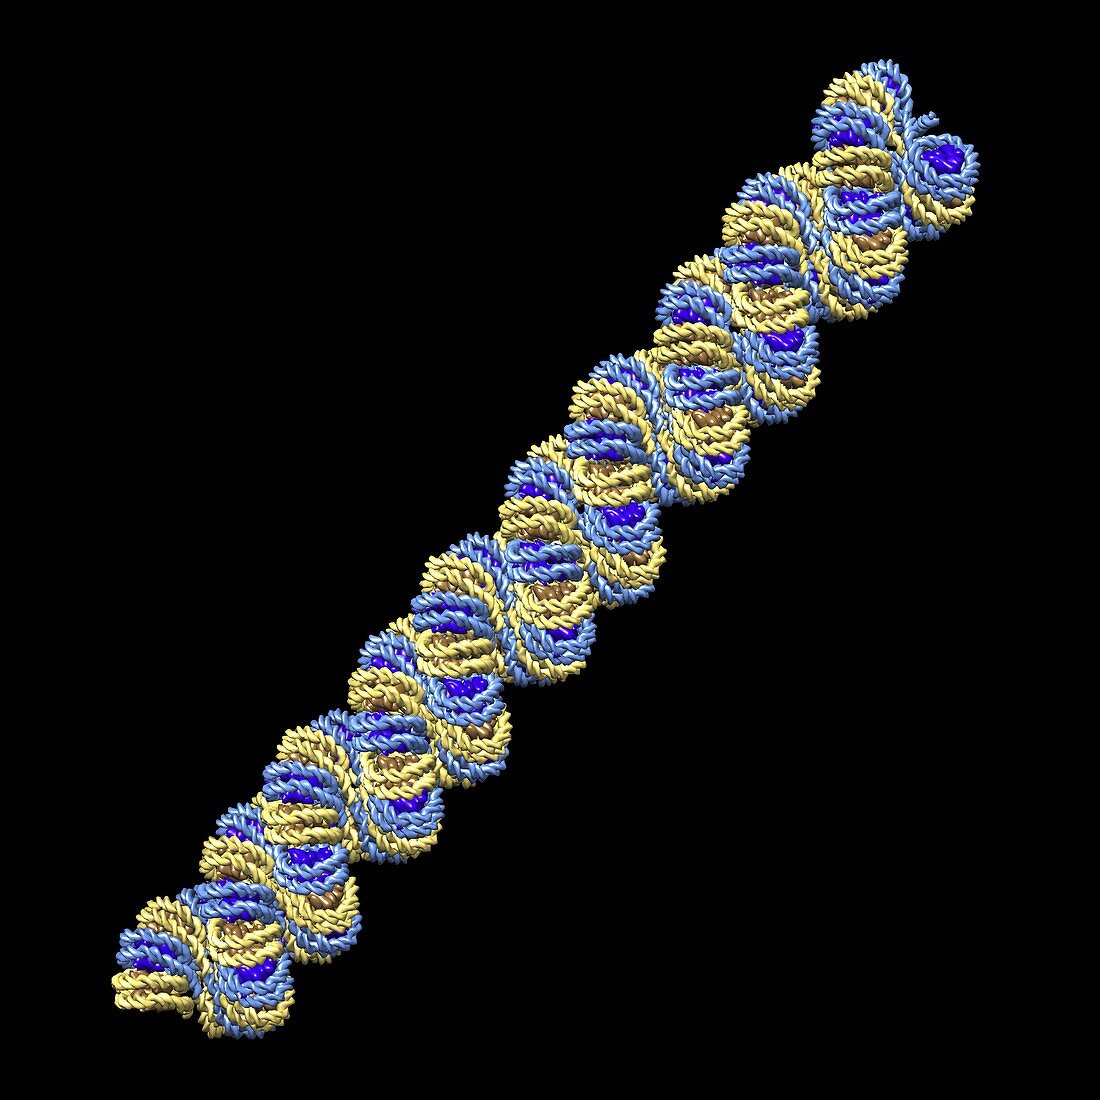 Chromatin fiber and DNA packaging